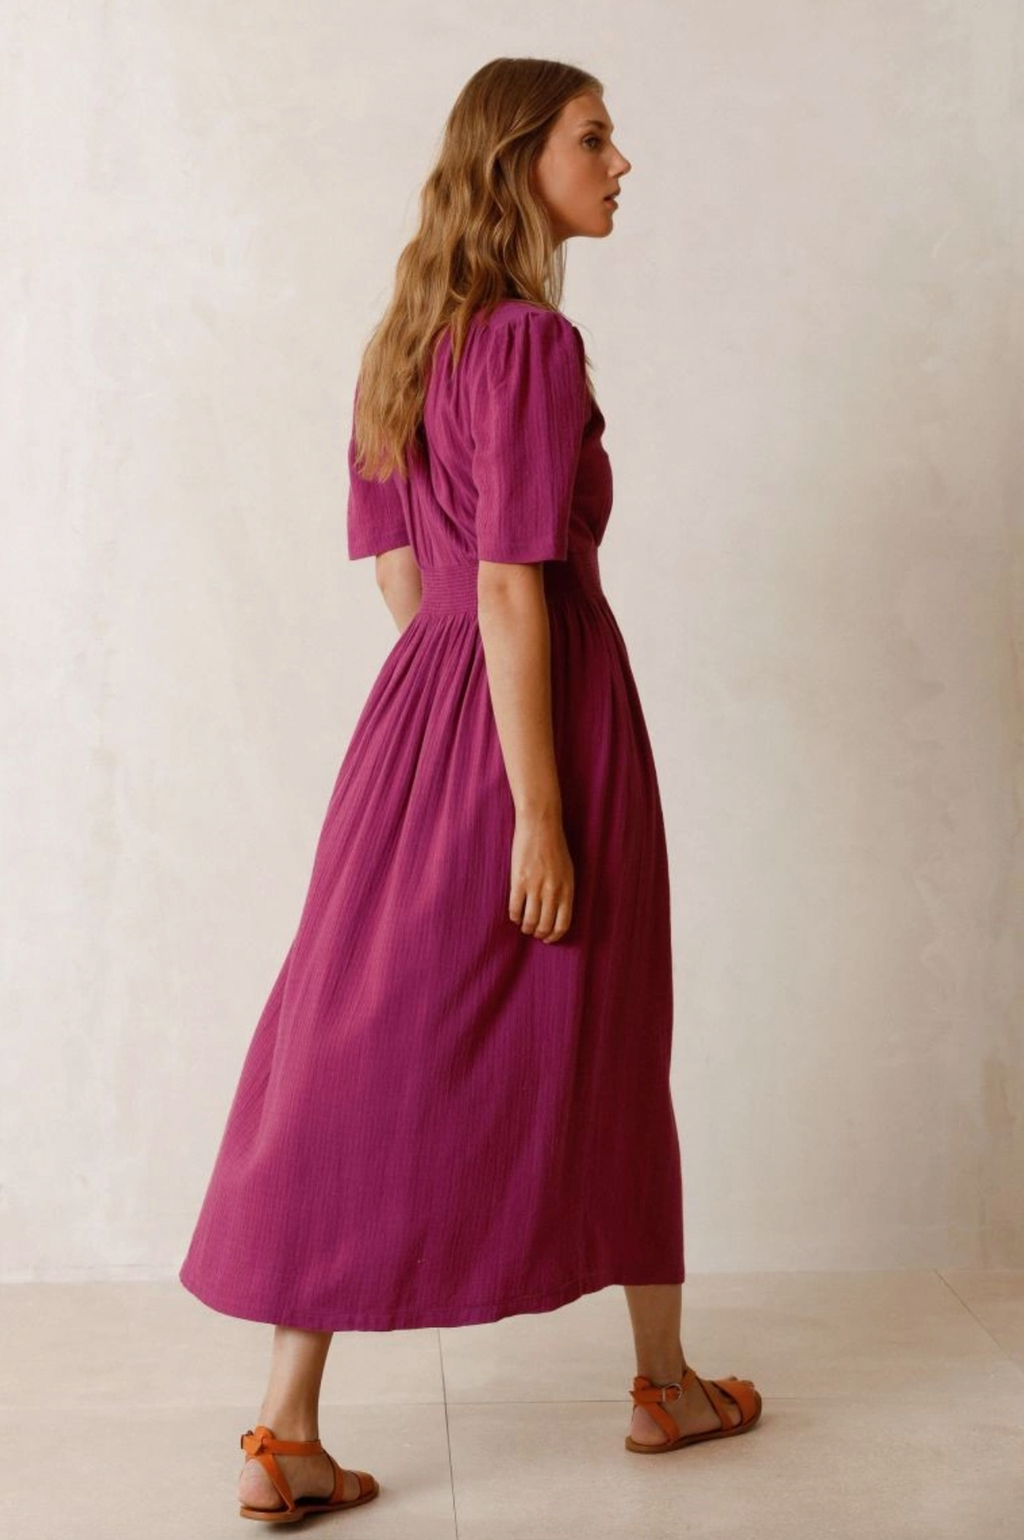 Indi & Cold Luise Romantic Violet Dress - The Mercantile London